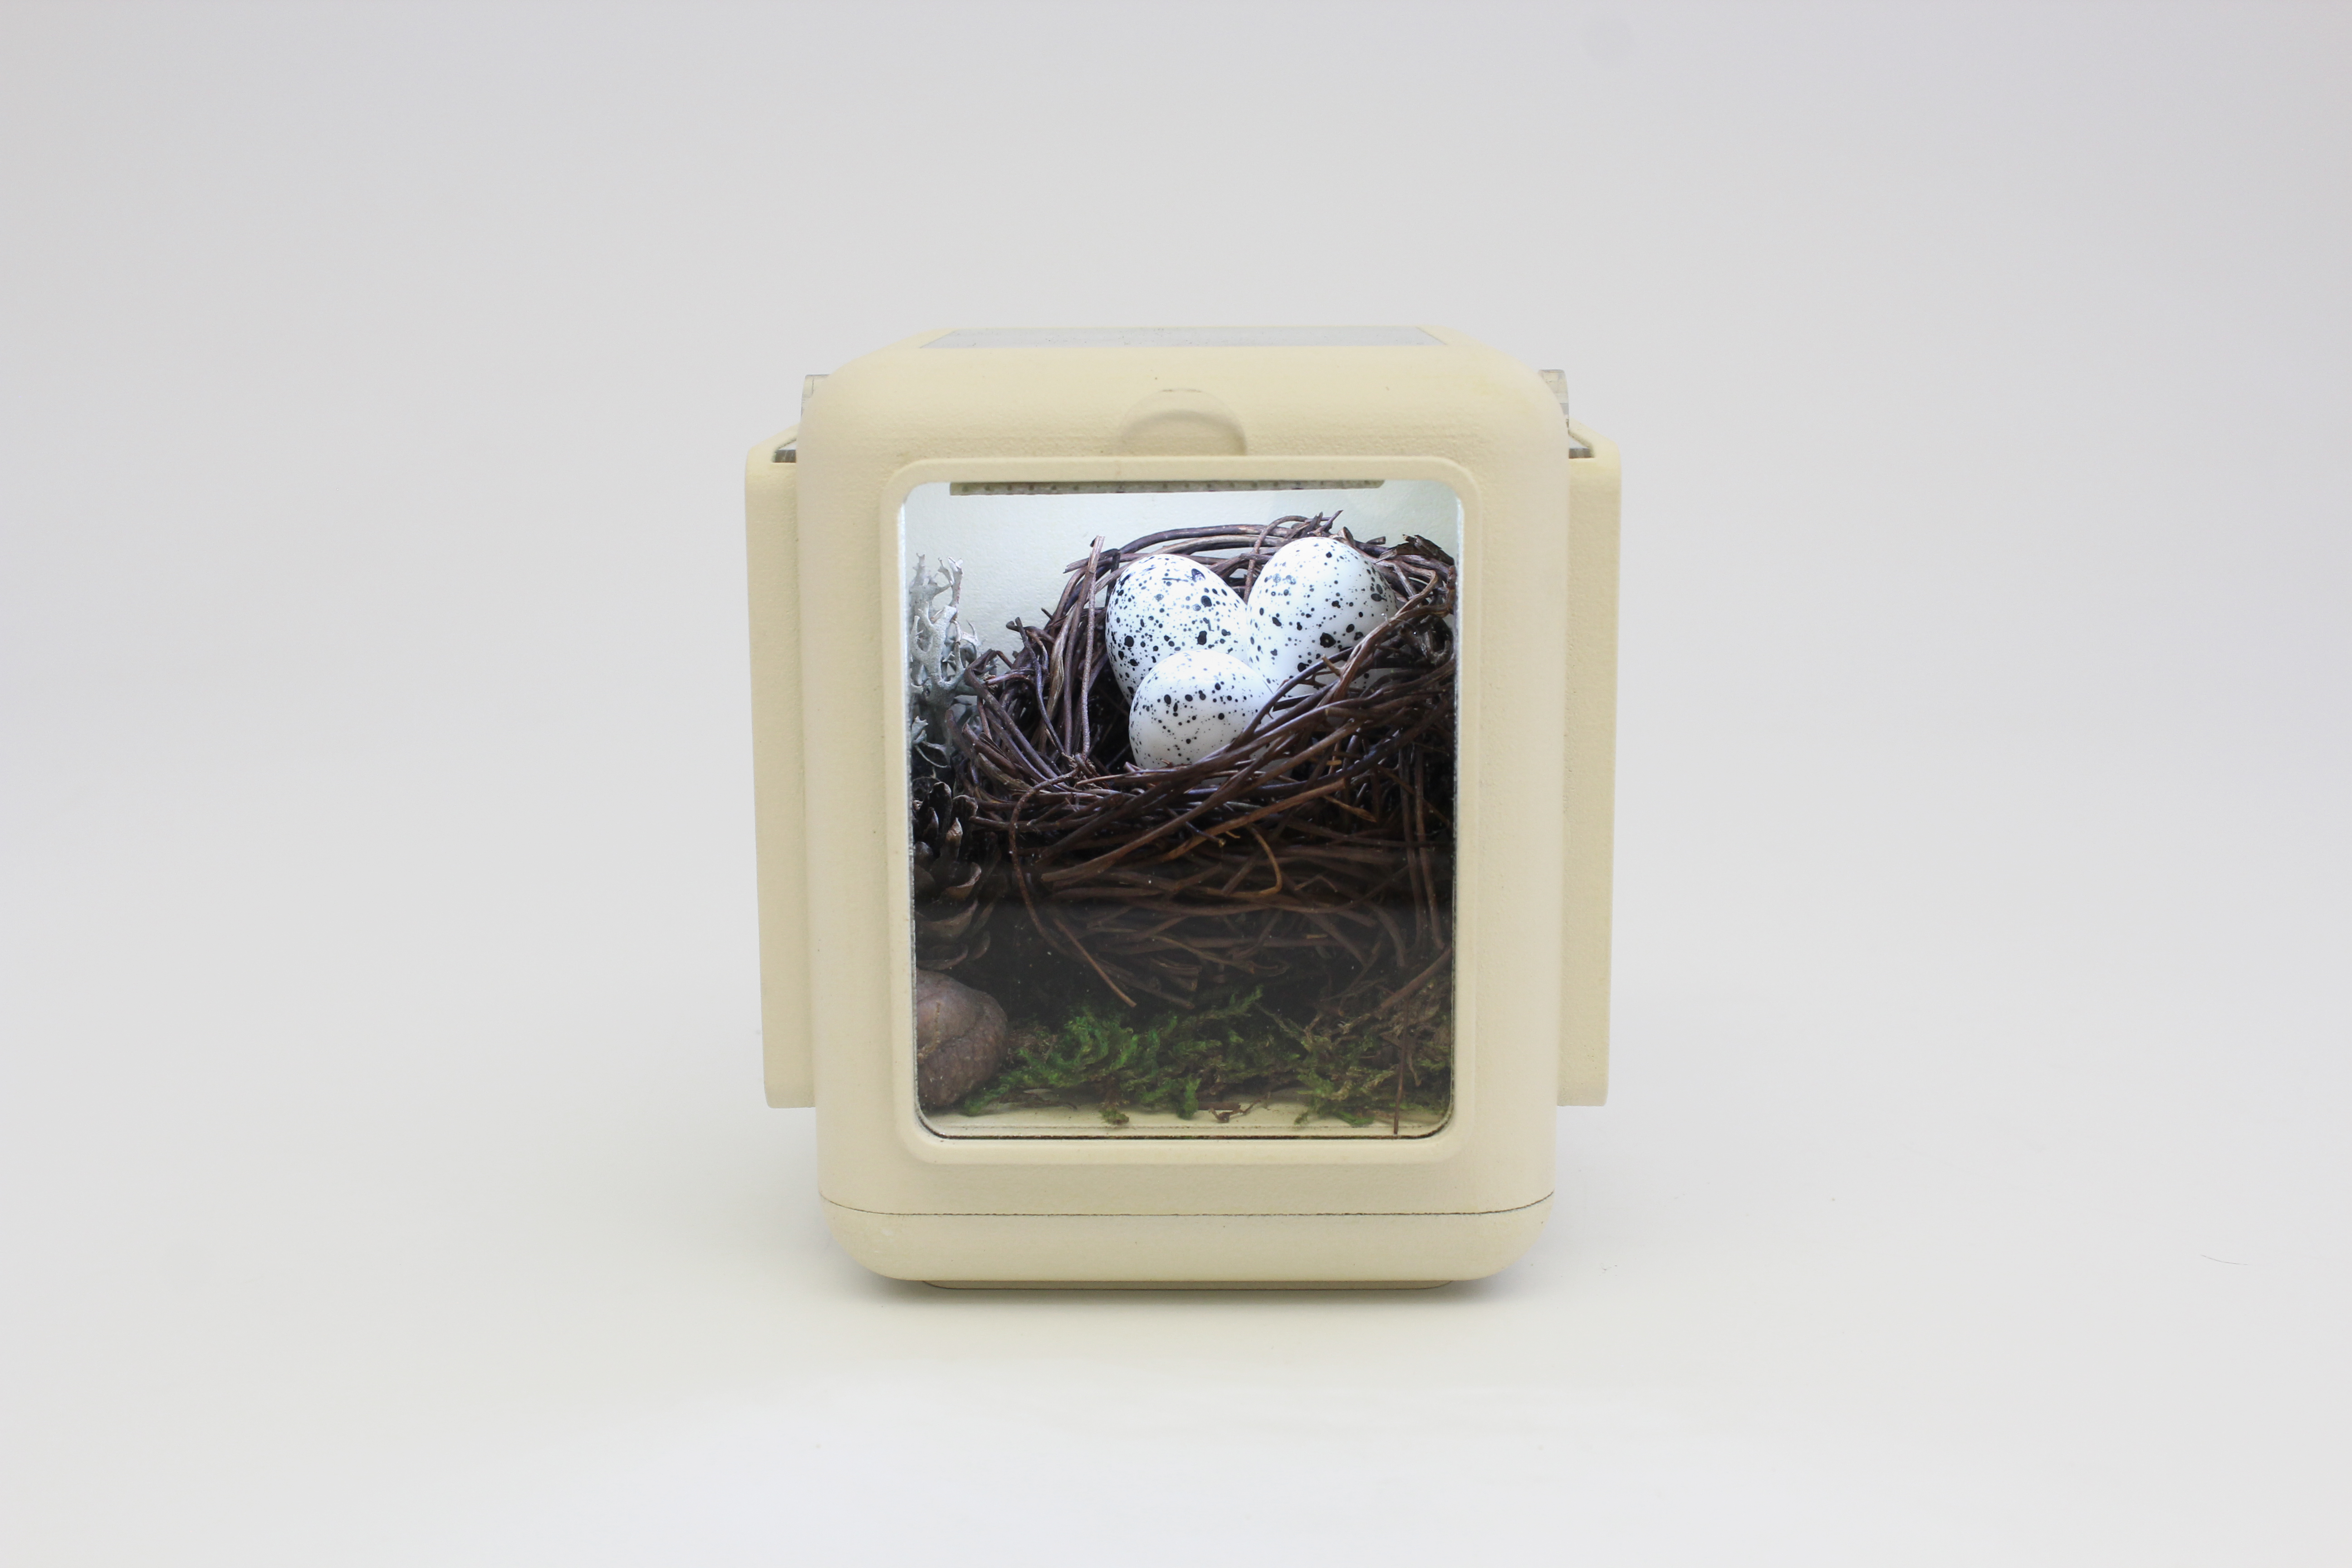 museum frame with nest diorama